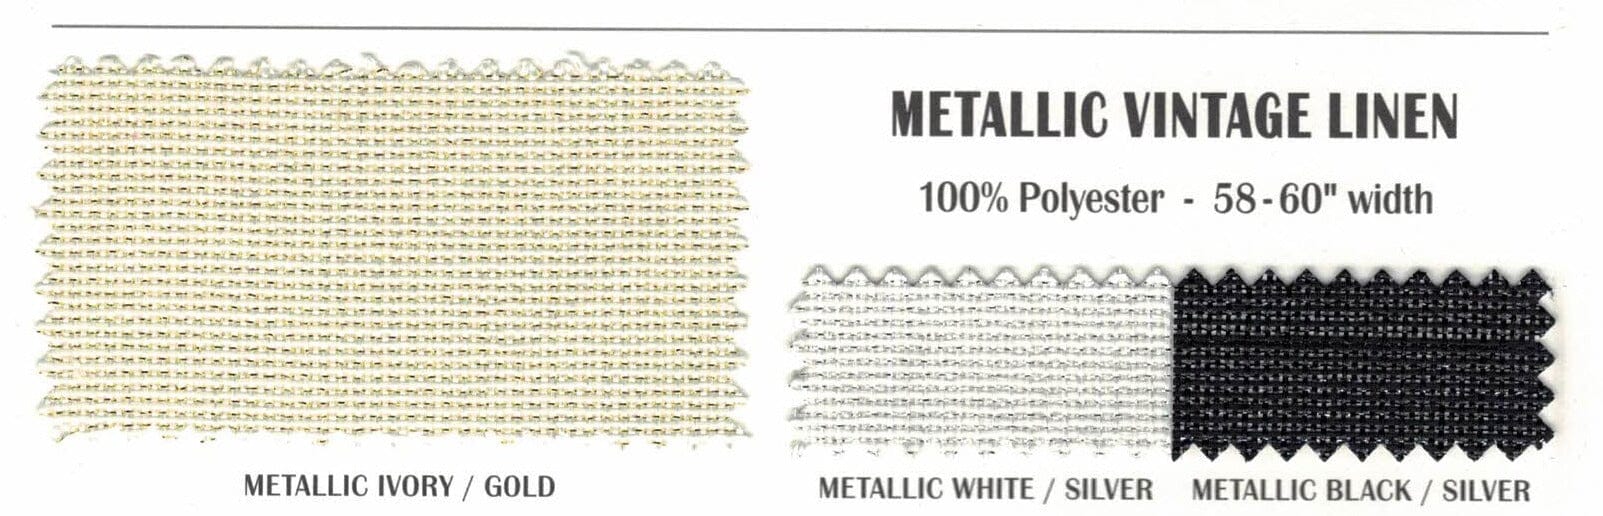 Metallic Vintage Linen Fabric | Imitation Burlap with Metallic Foil | 60" Wide | Washable Burlap Fabric for Decor | Fabric mytextilefabric 